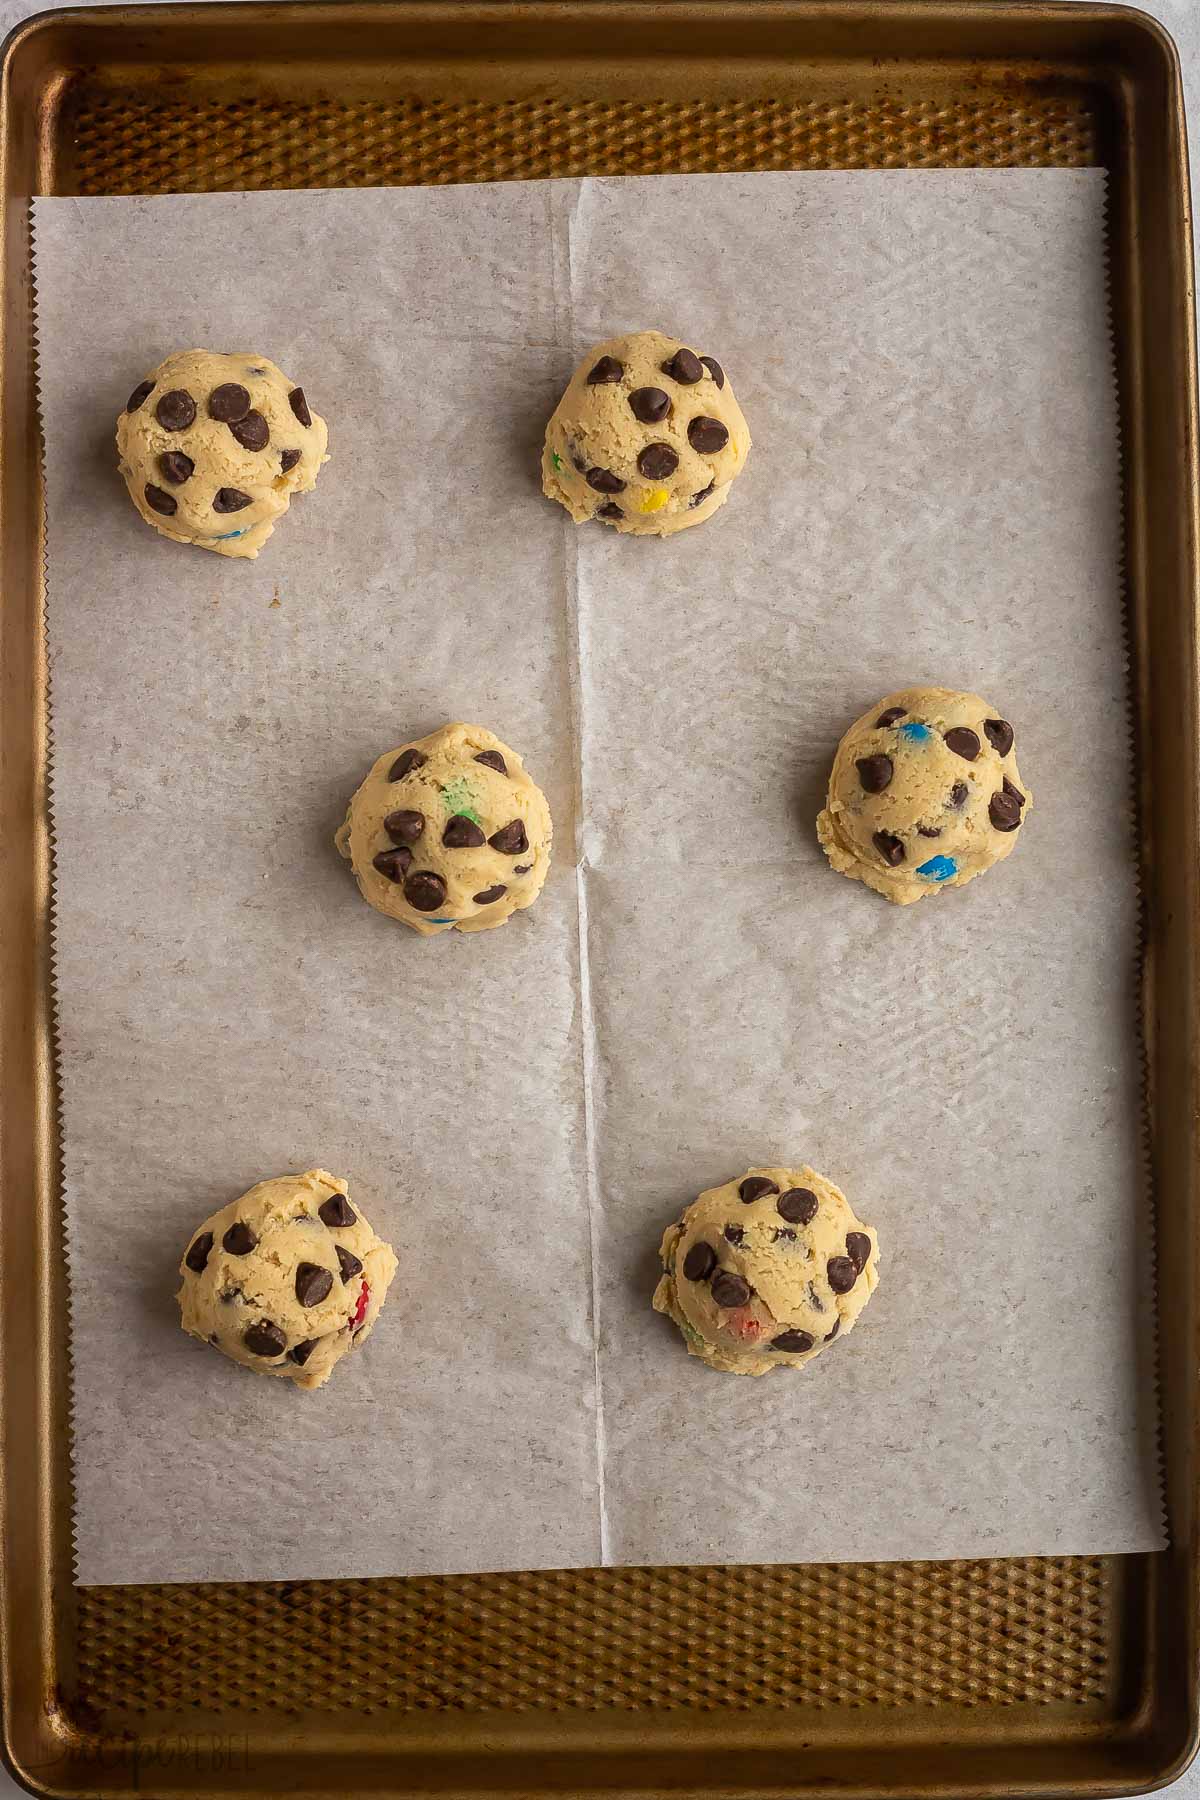 six cookie dough balls on baking sheet.